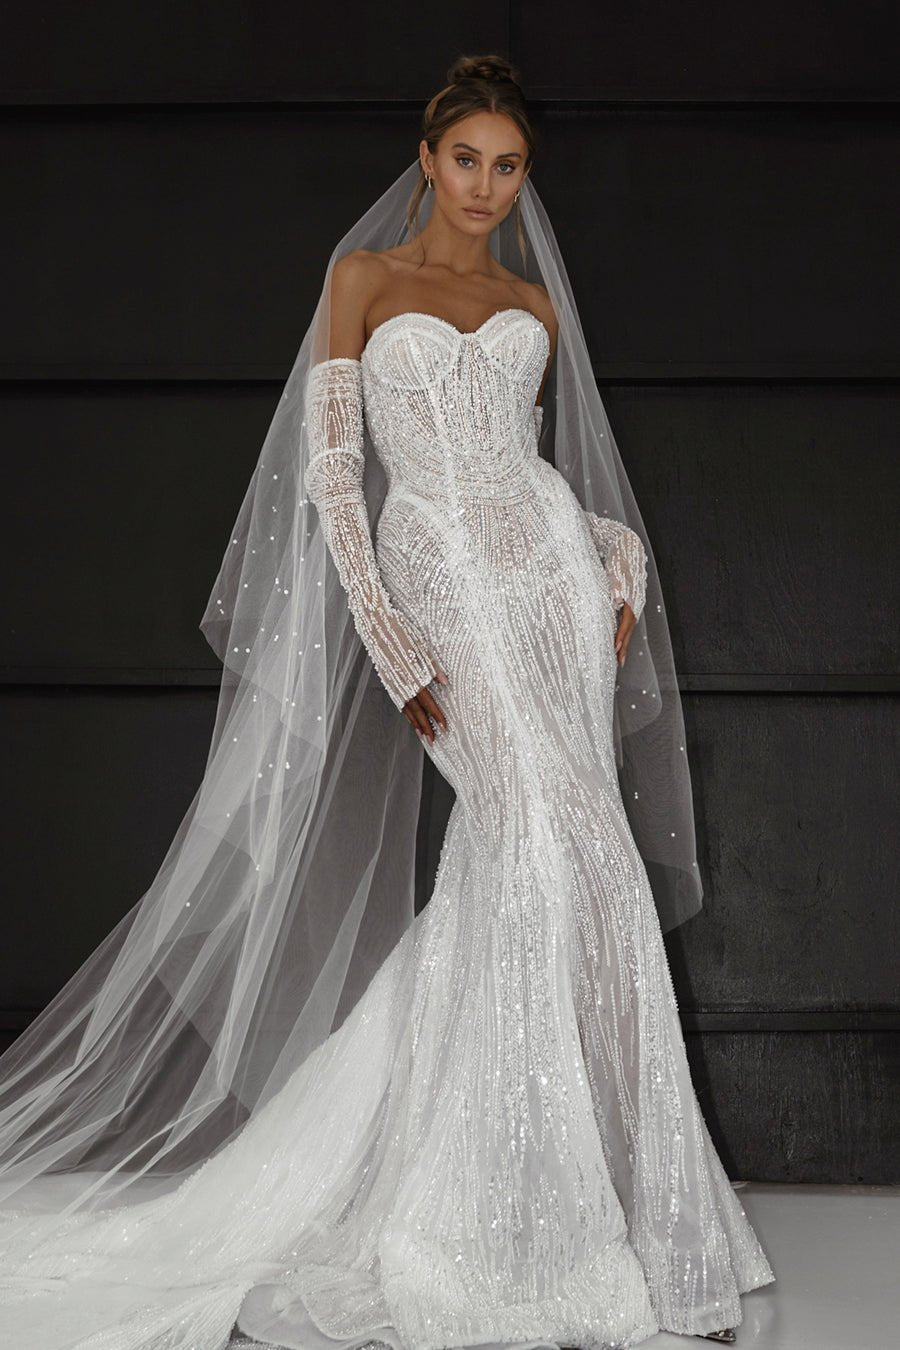 Pallas Couture ROBE MINI Second Hand Wedding Dress Save 20% - Stillwhite